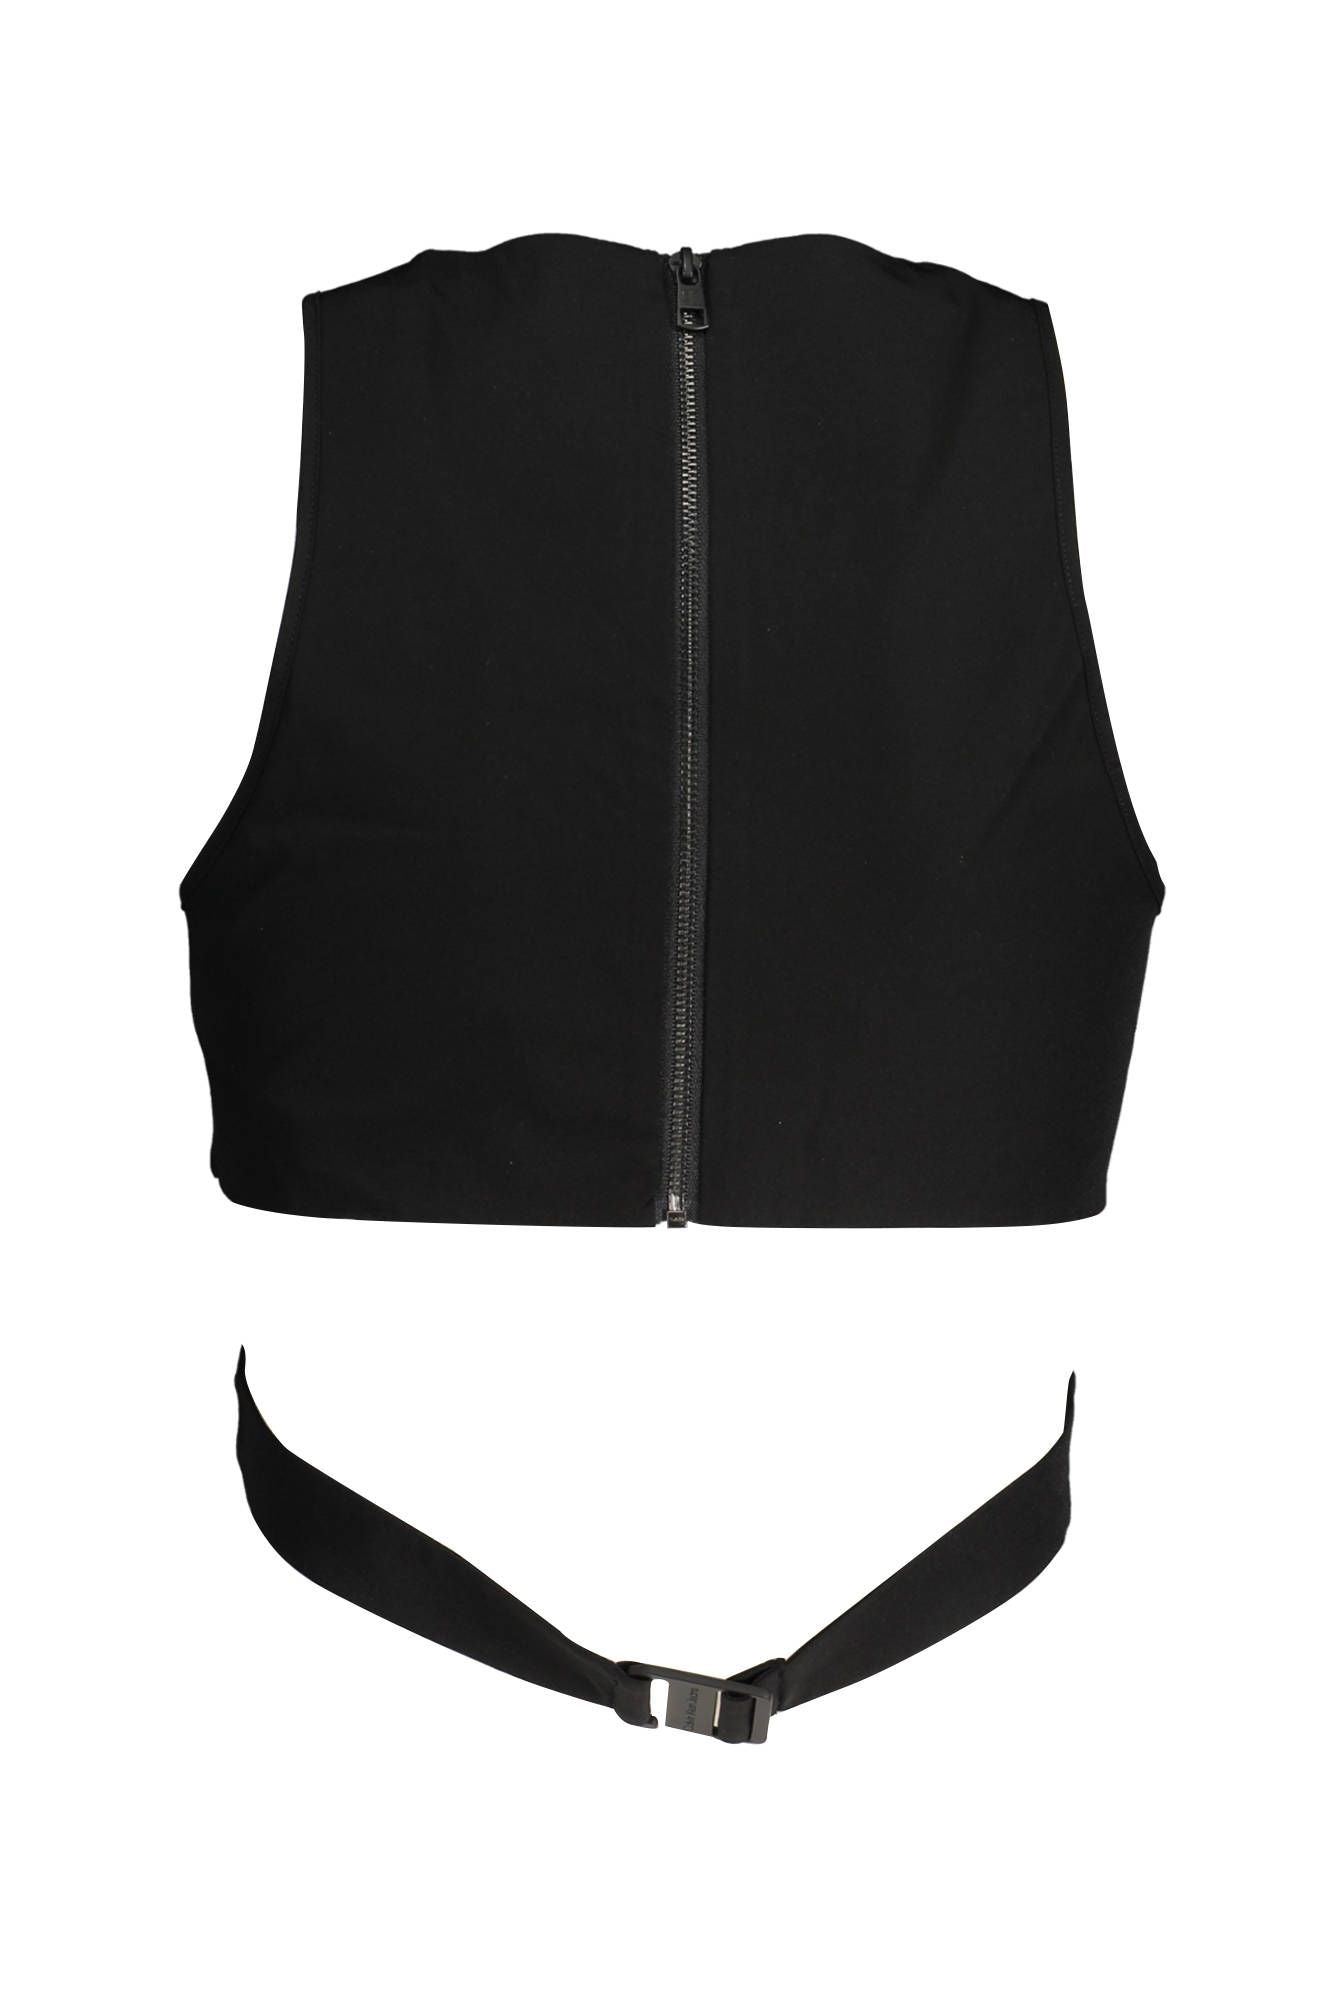 Calvin Klein Sleek Sleeveless Designer Top with Back Zip Detail